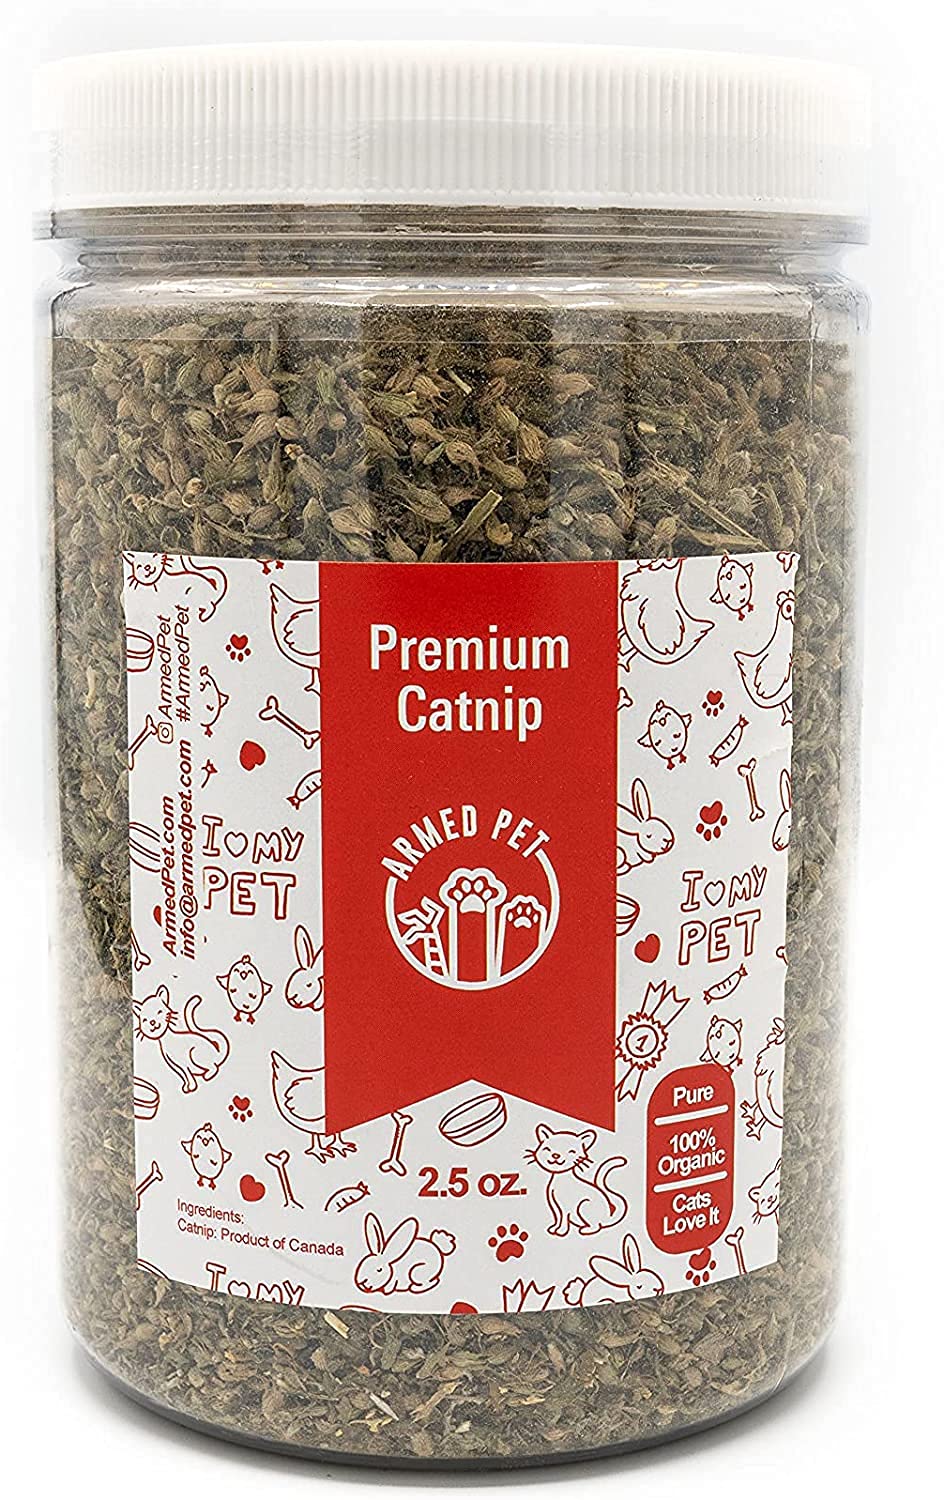 ArmedPet Premium Catnip, Infused with Essential Organic Potent Nepetalactone Cat Nip Treats 2.5 oz - GoodBuy.ai